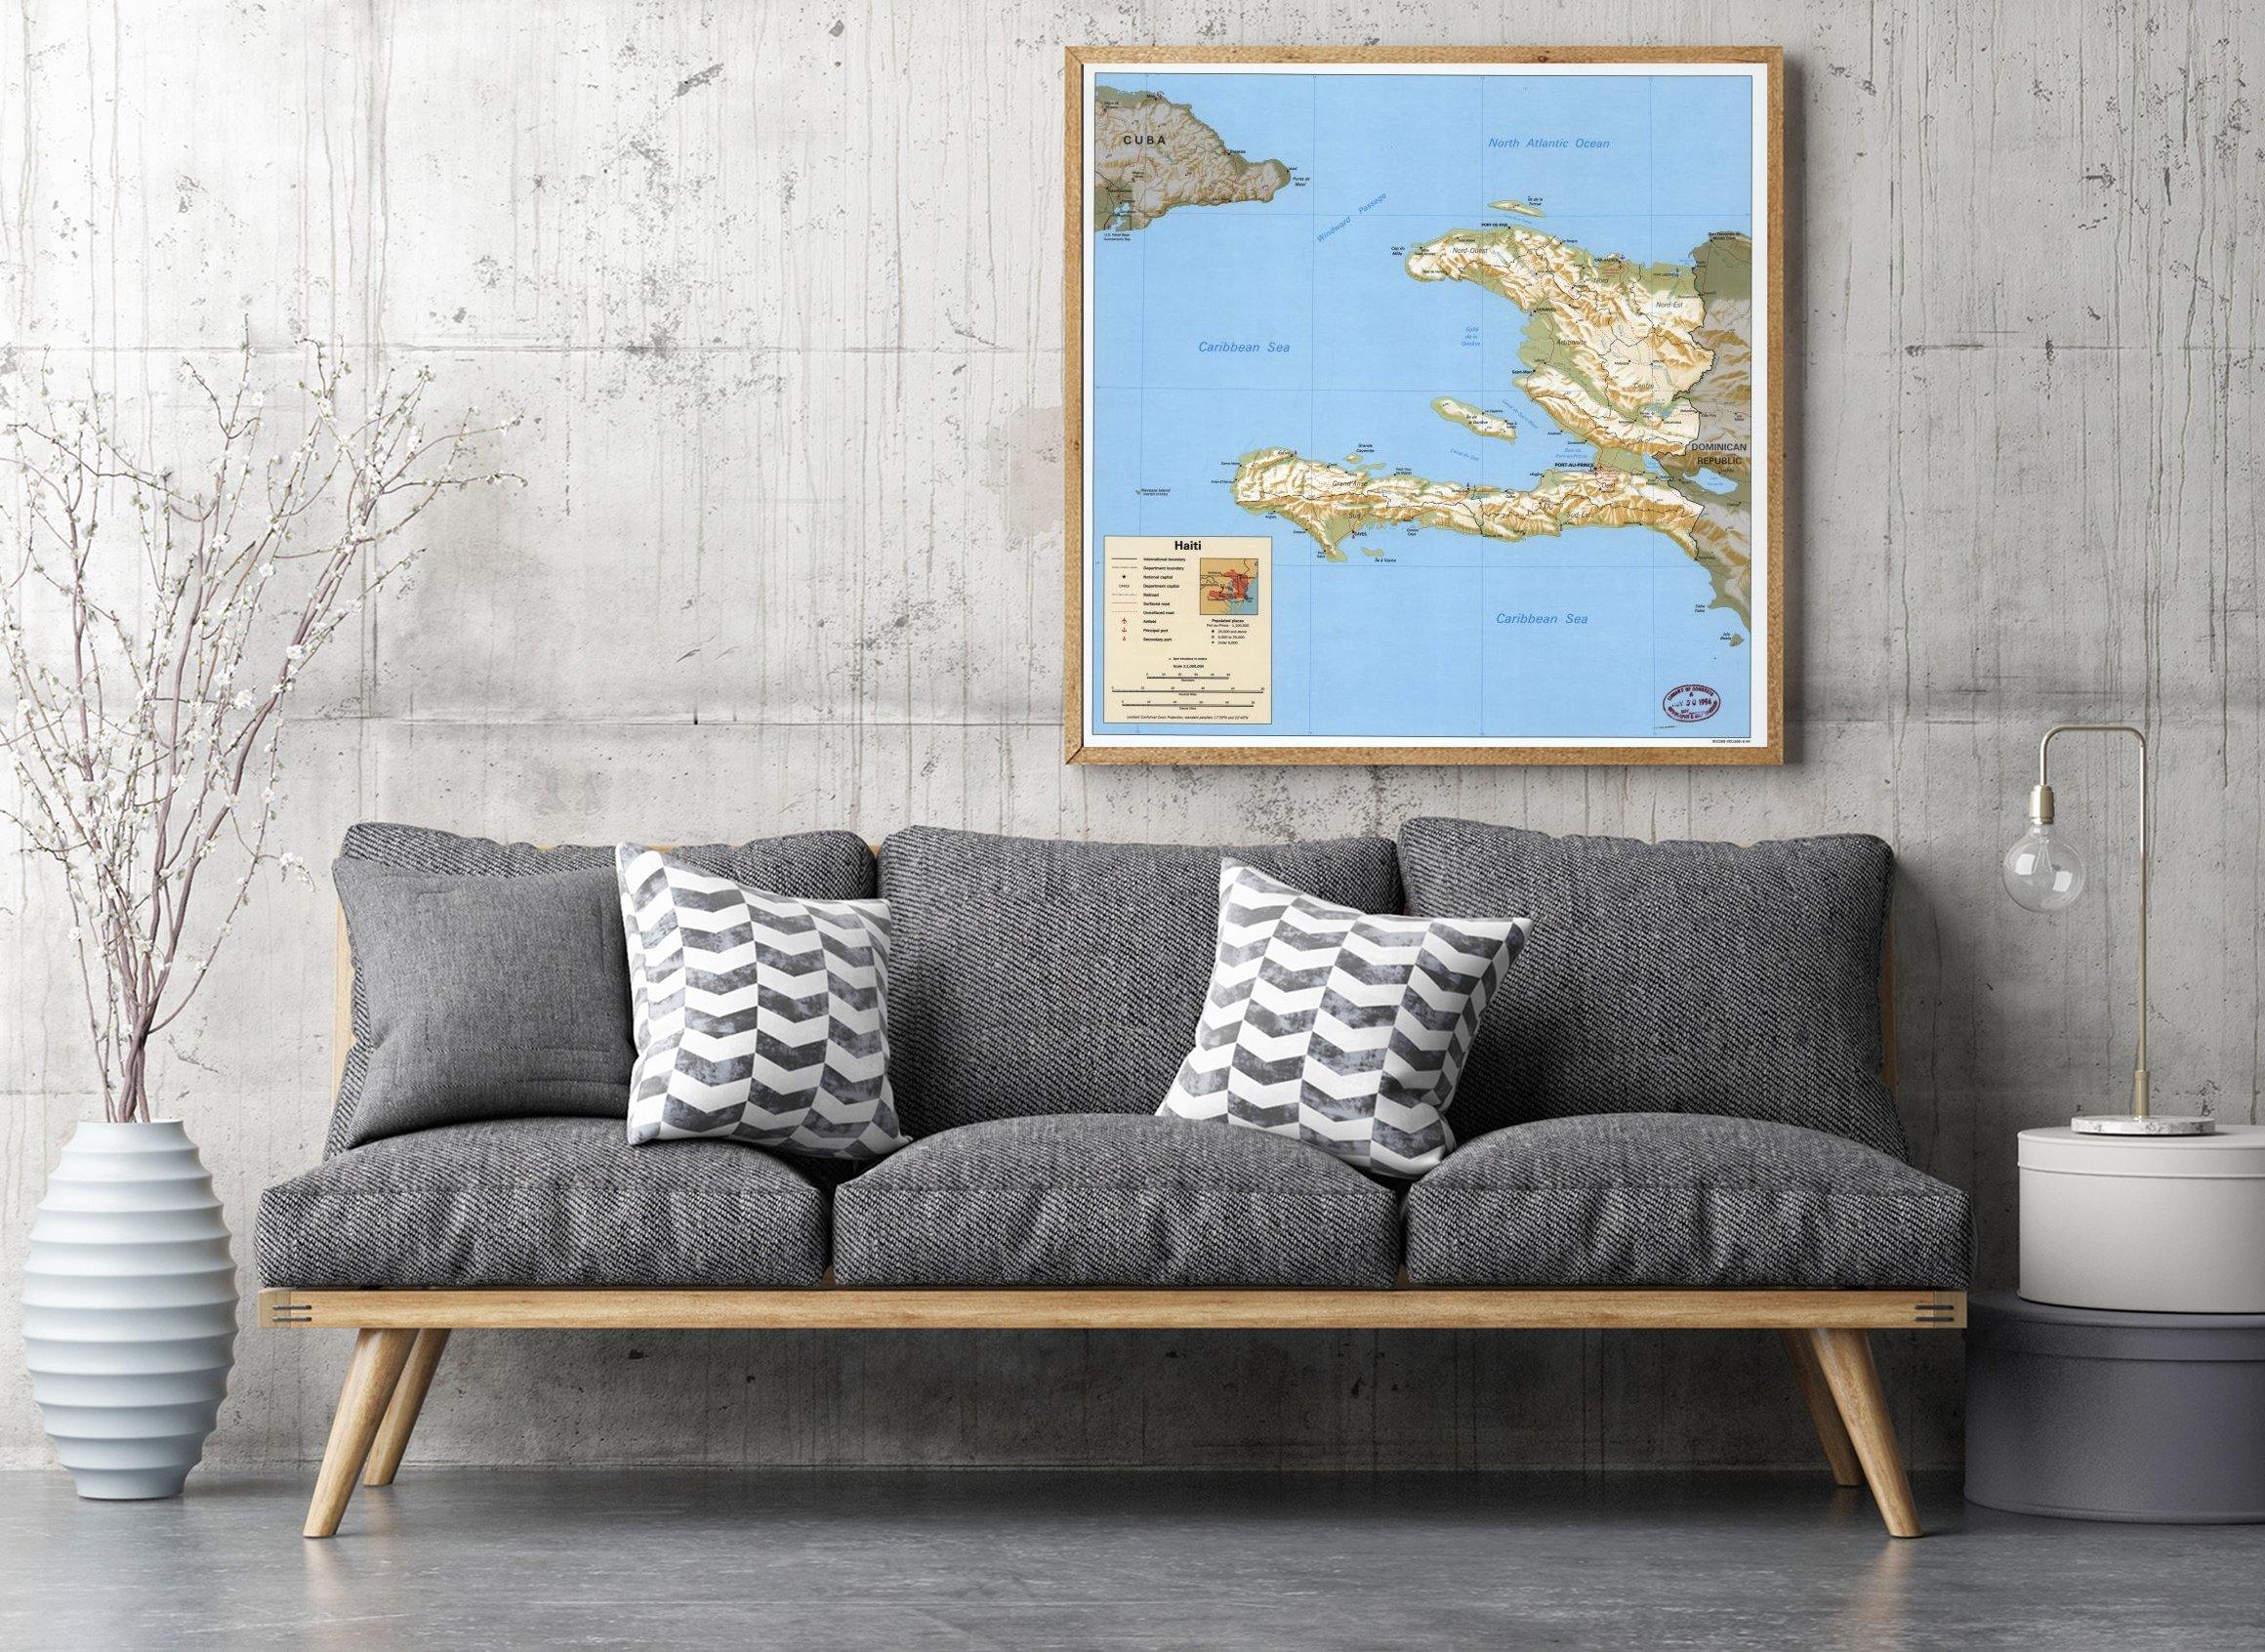 1994 Map| Haiti| Haiti Map Size: 24 inches x 24 inches |Fits 24x24 siz - New York Map Company